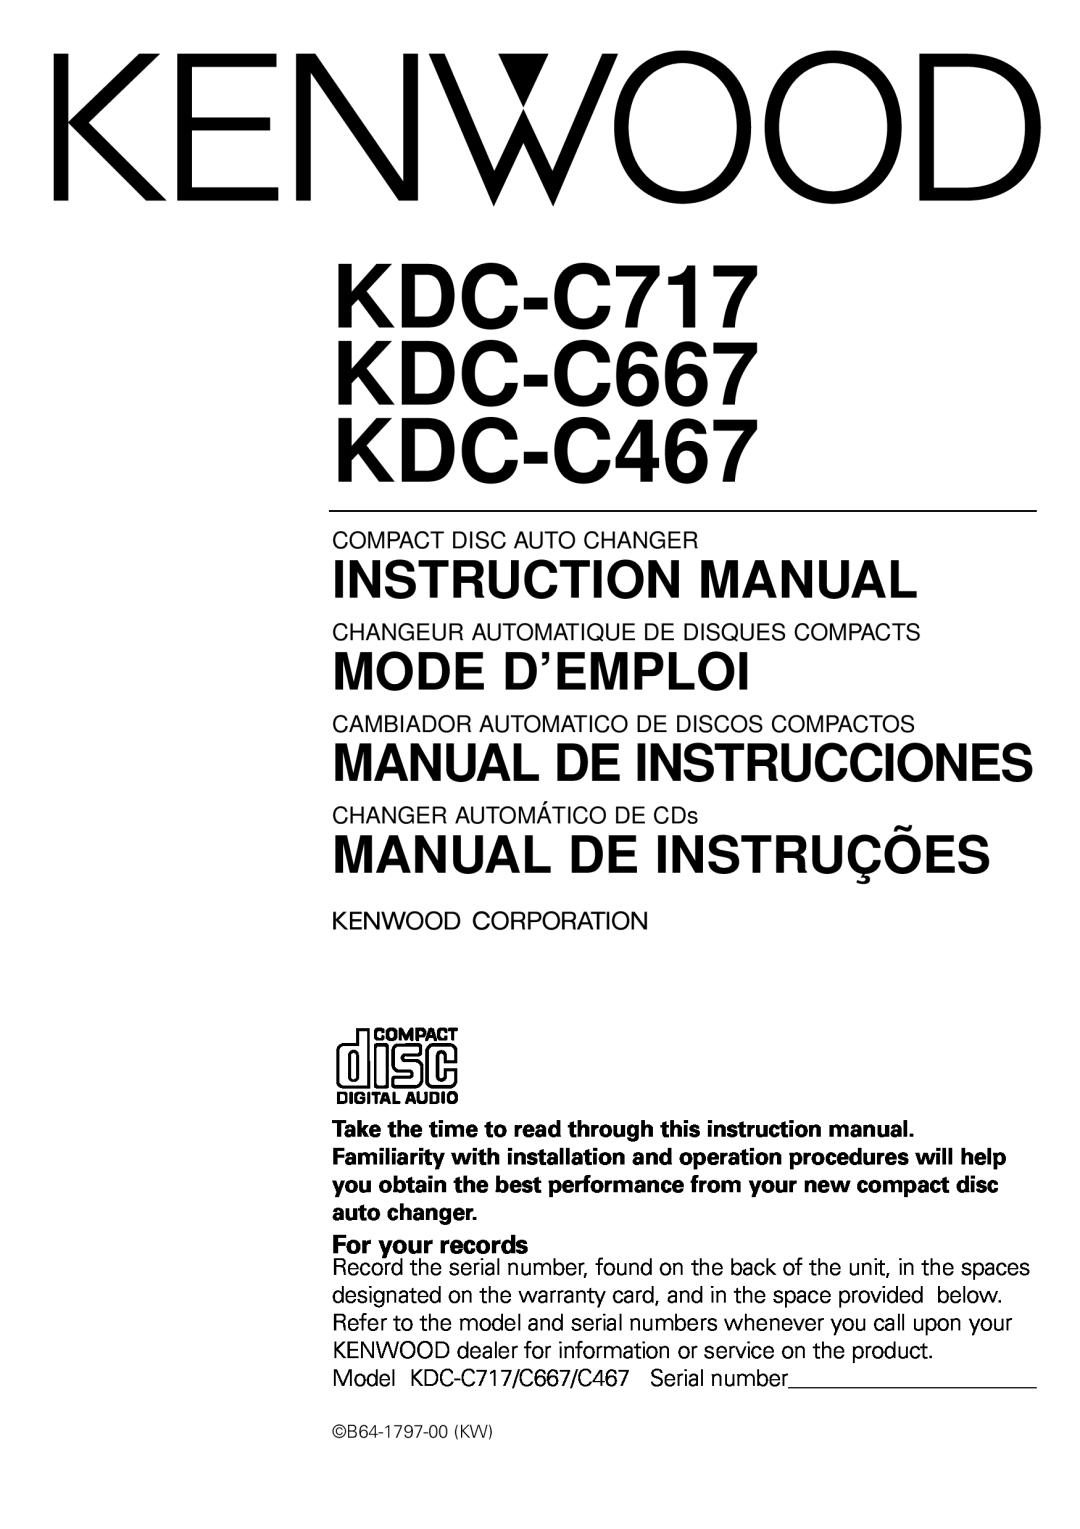 Kenwood instruction manual Model KDC-C717/C667/C467Serial number, KDC-C717 KDC-C667 KDC-C467, Mode D’Emploi 